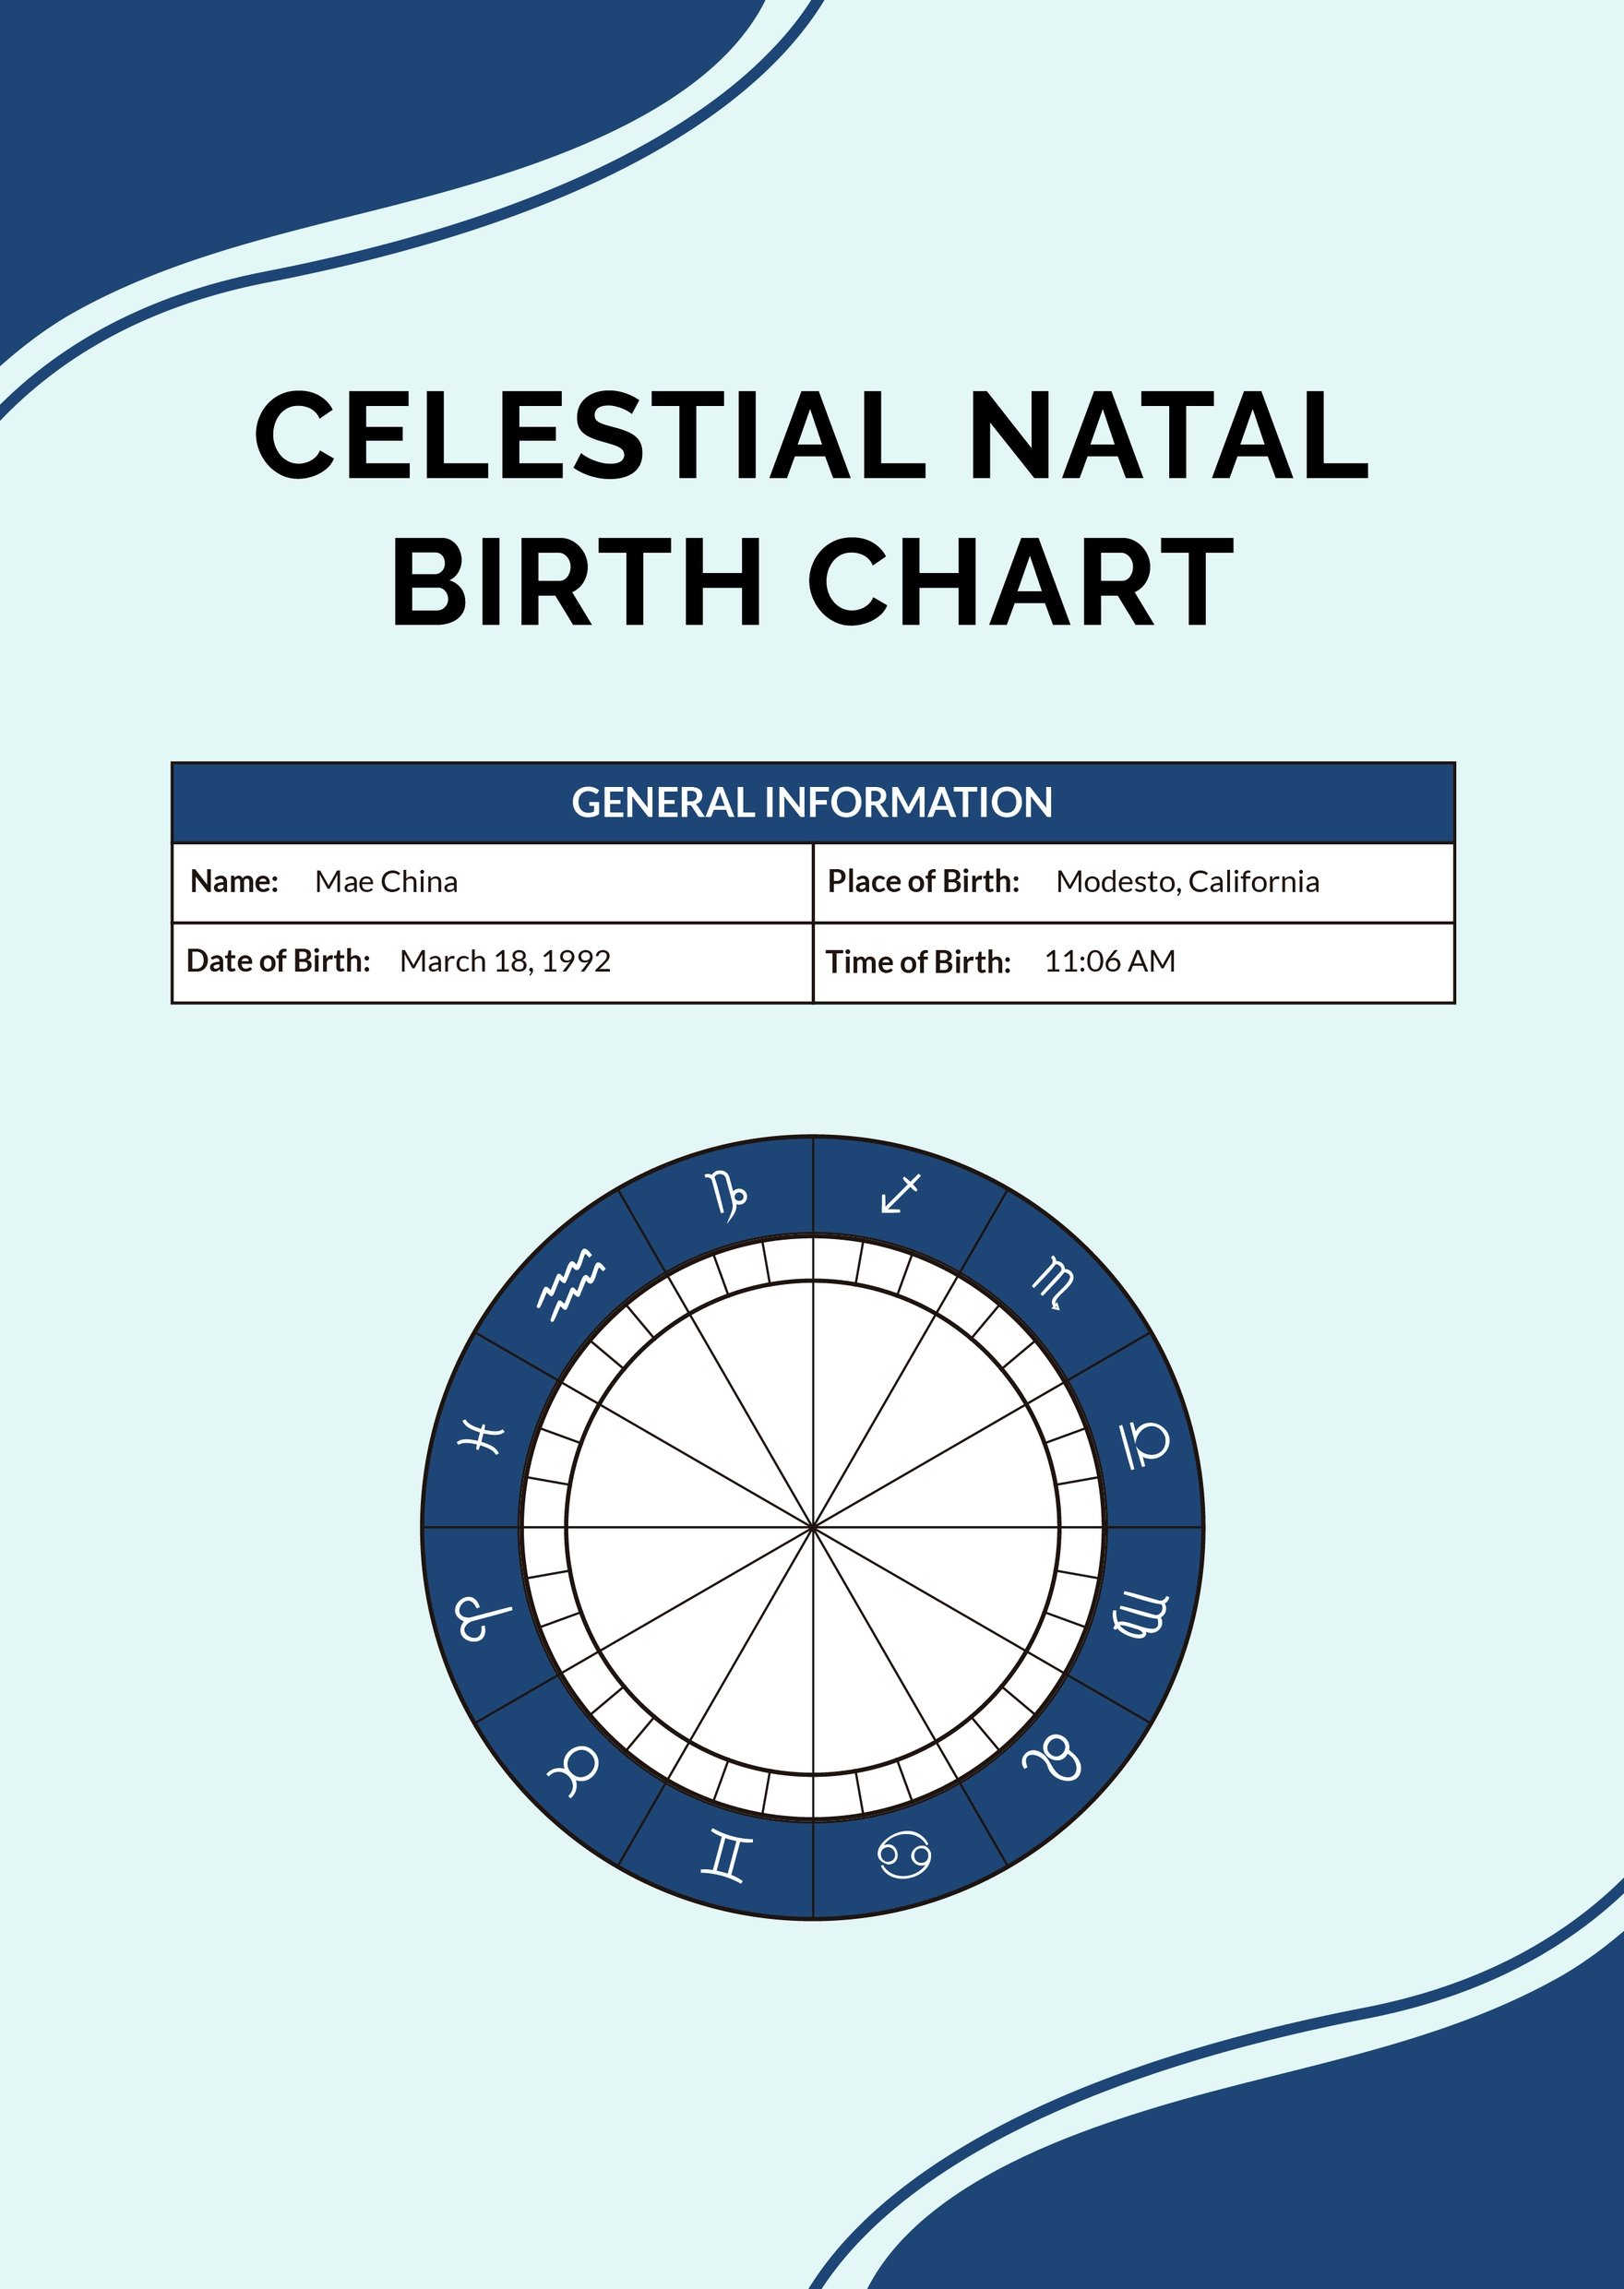 Free Celestial Natal Birth Chart Template in PDF, Illustrator